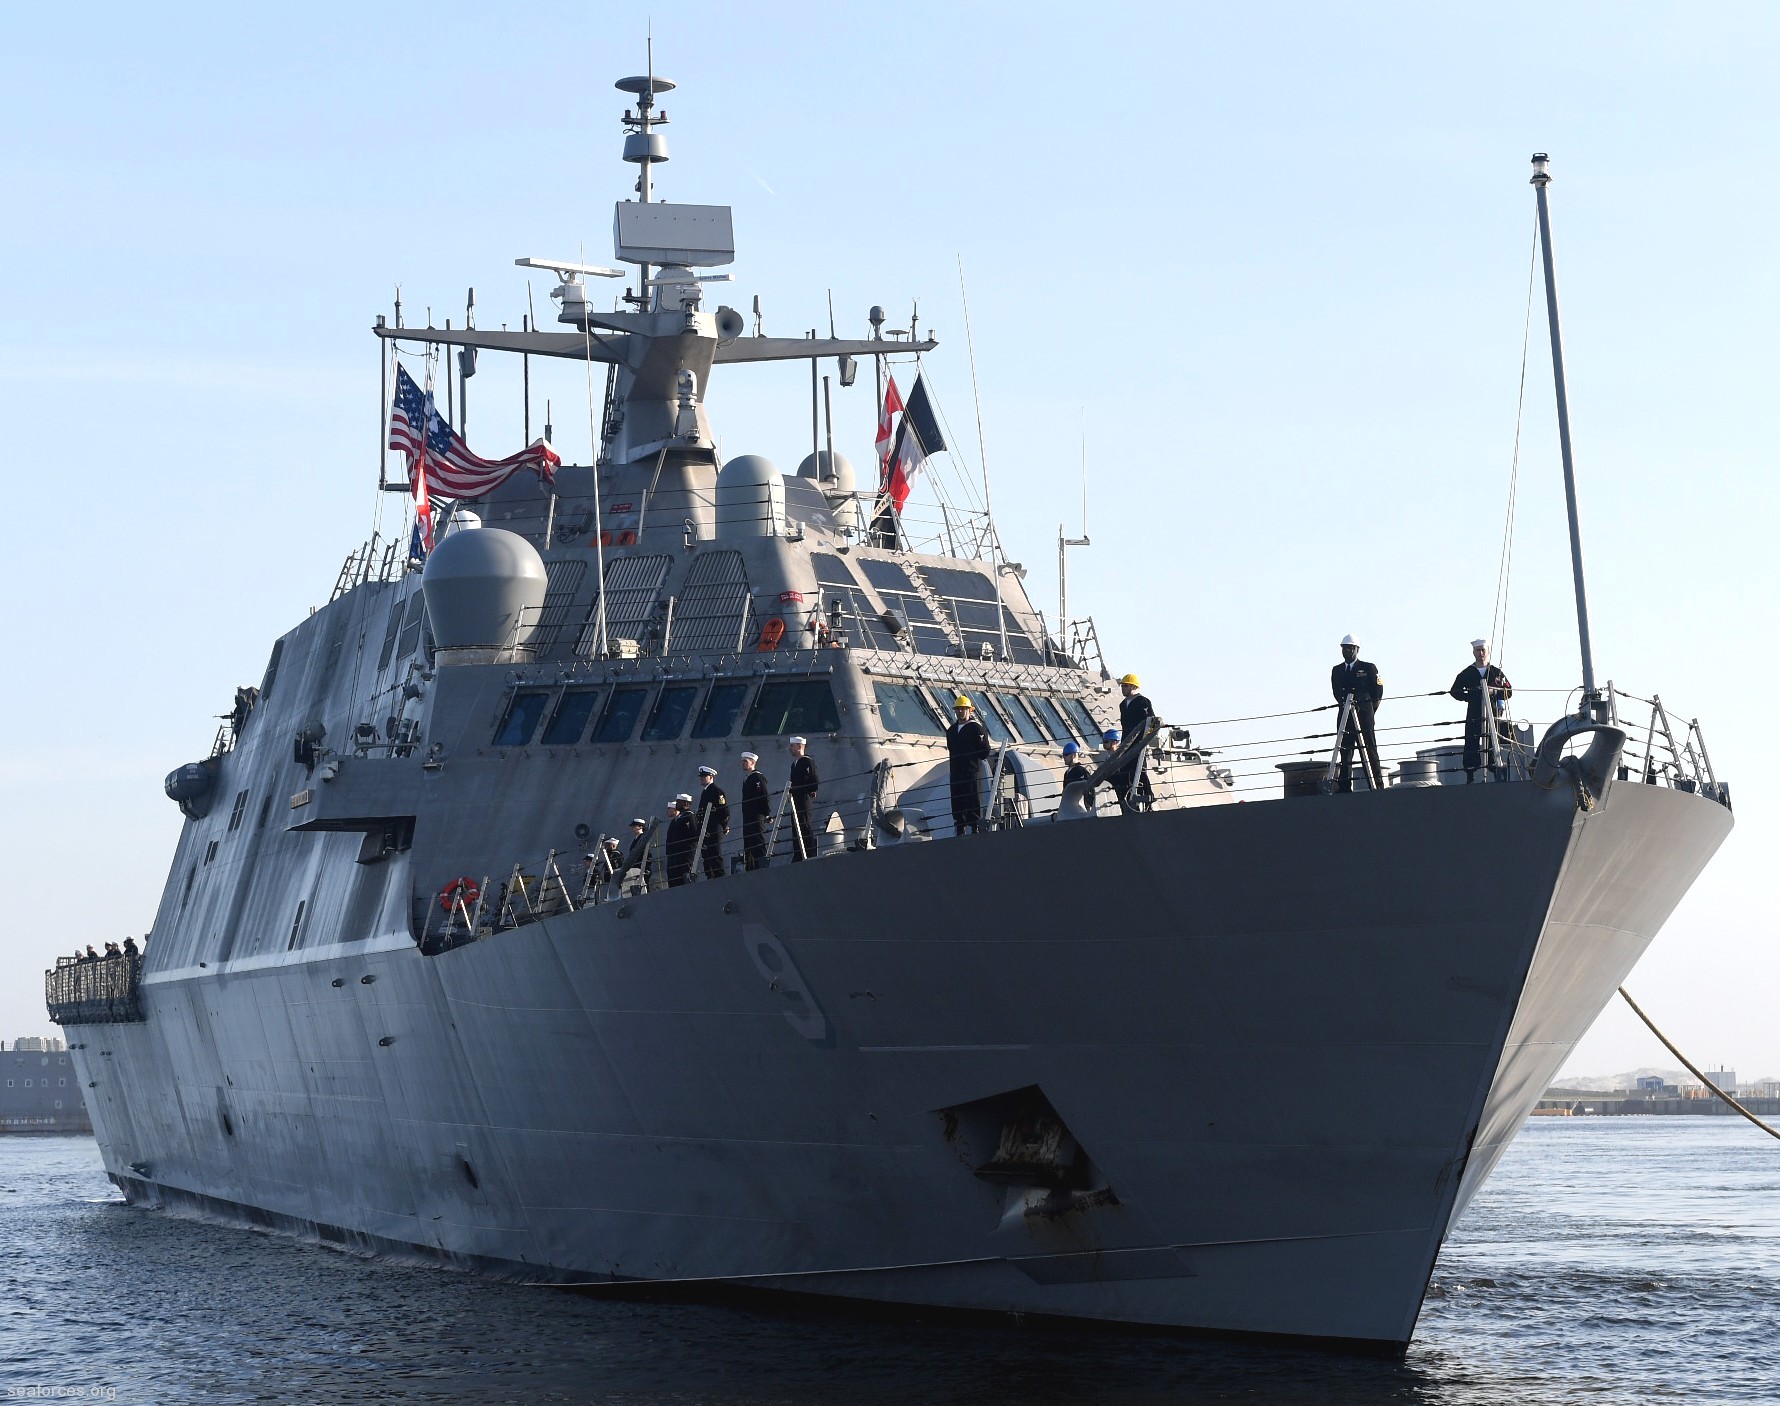 lcs-9 uss little rock freedom class littoral combat ship us navy 32